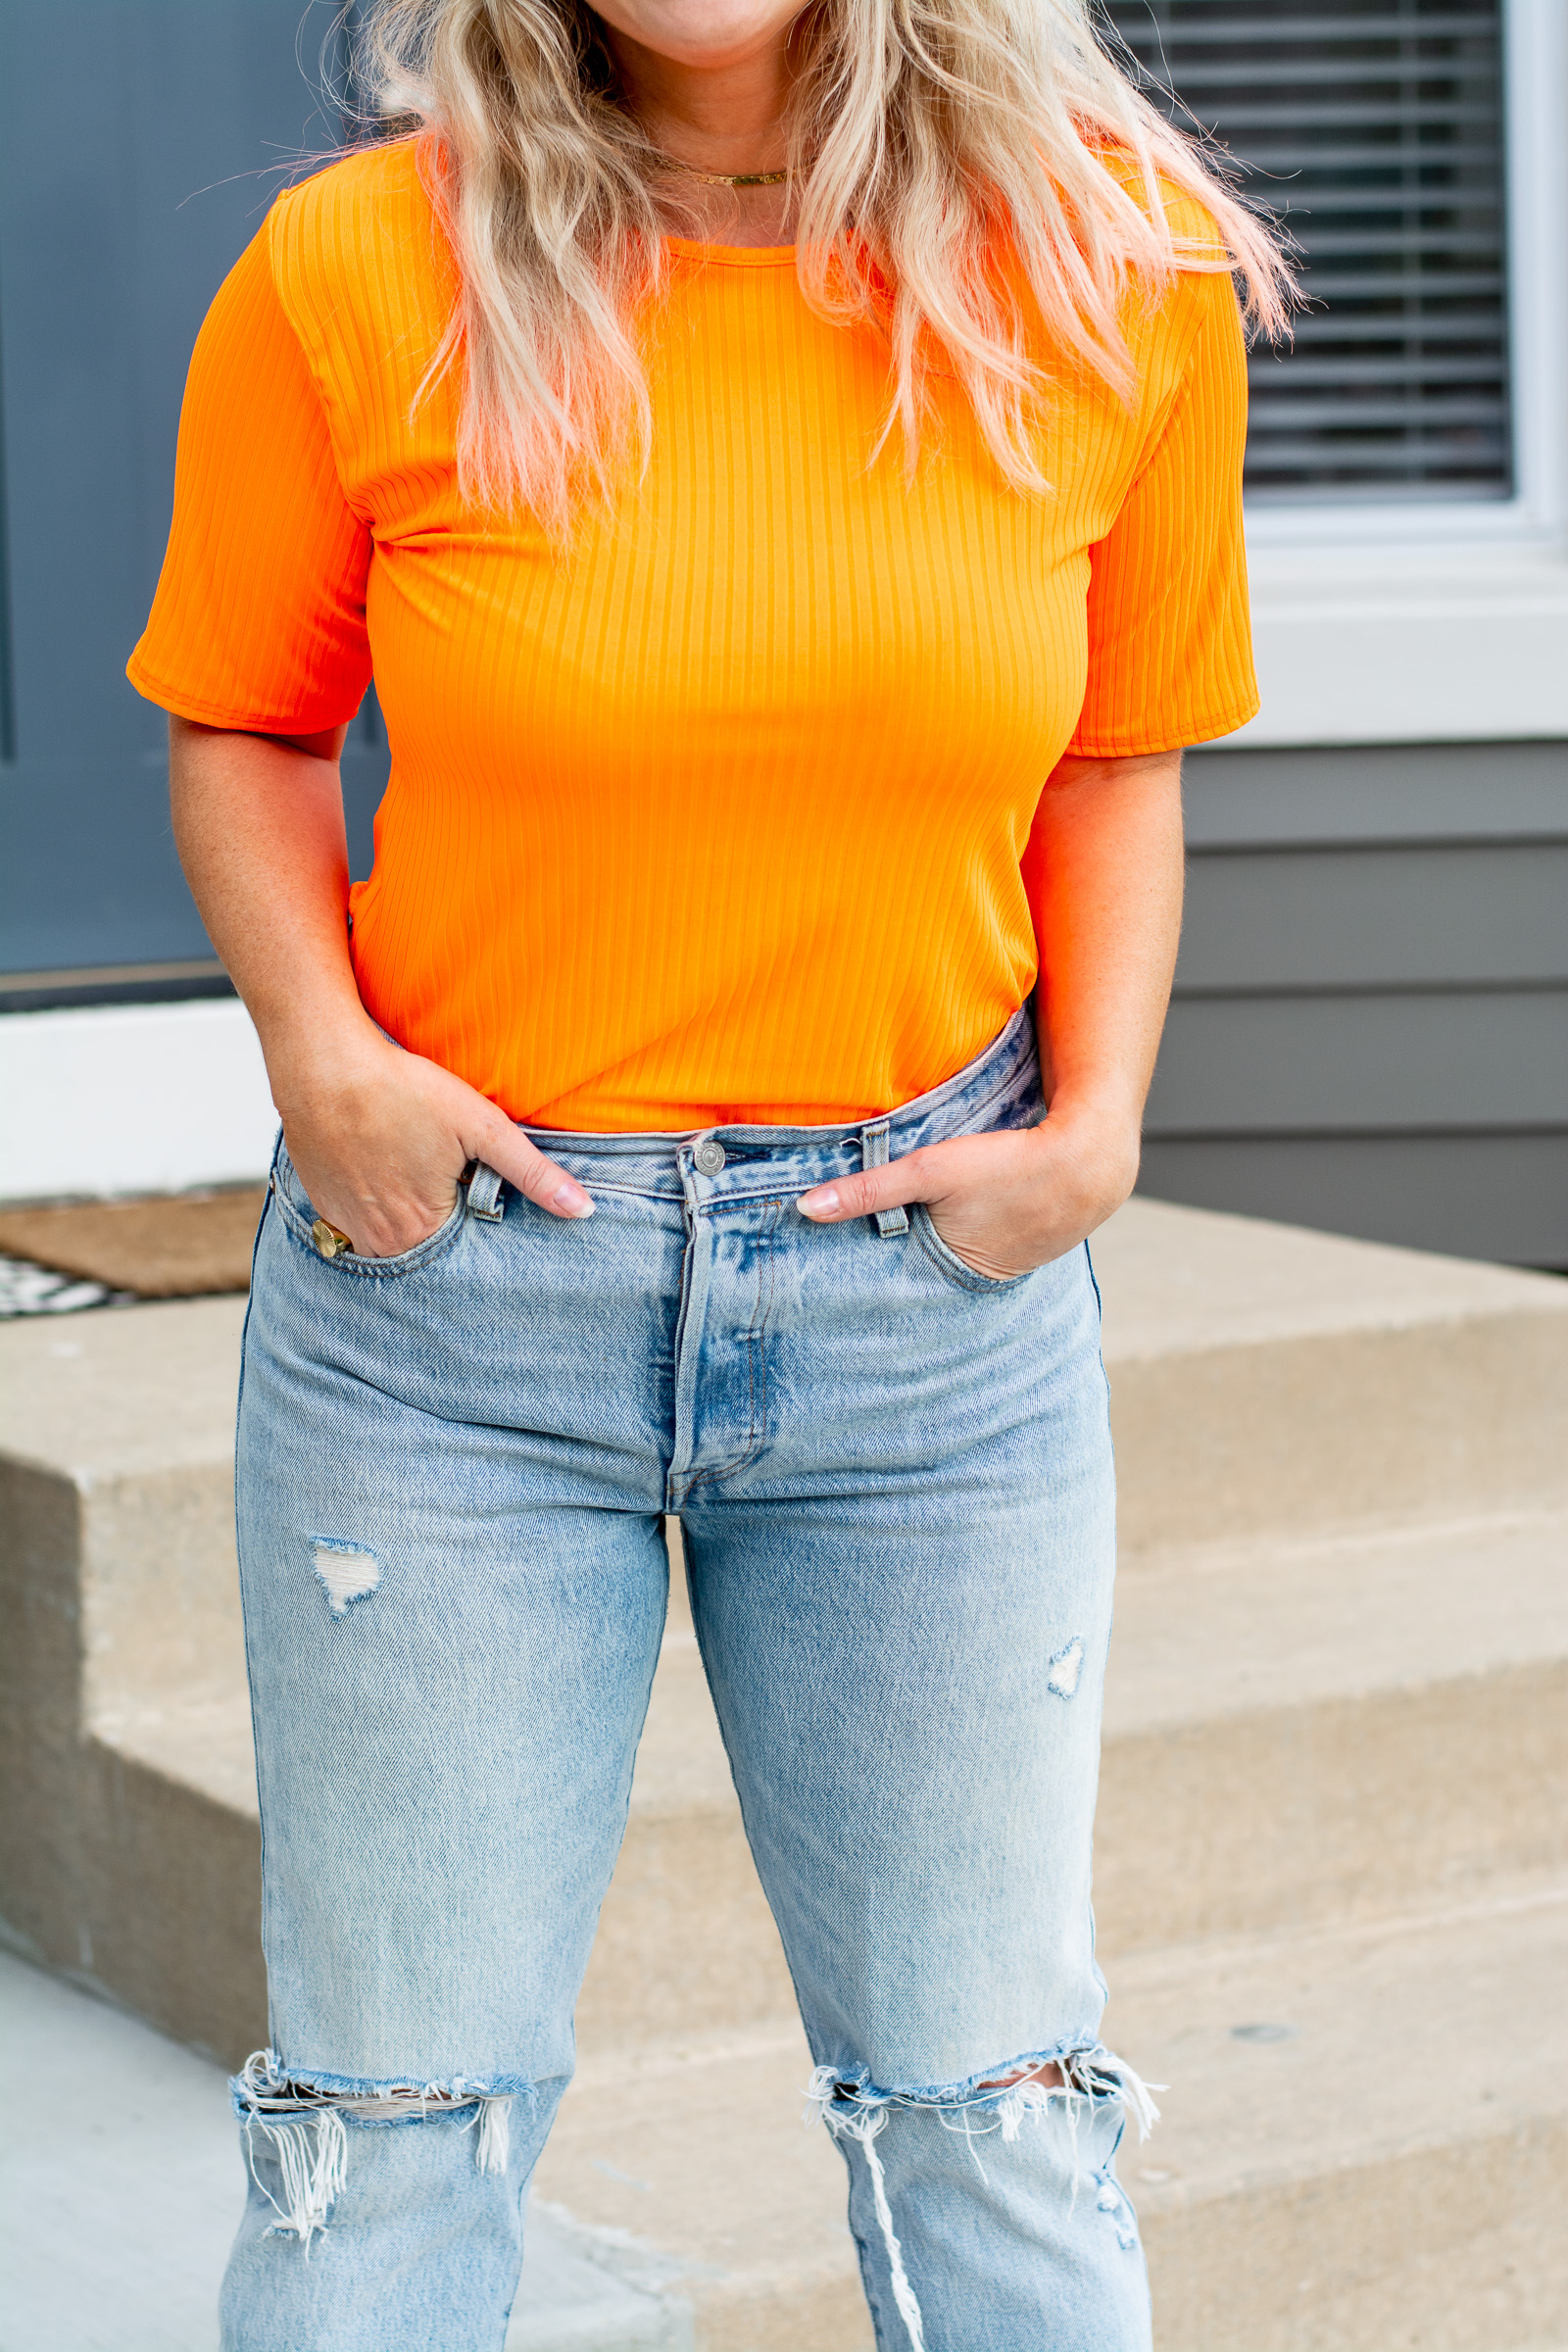 Neon Orange for Summer. | LSR